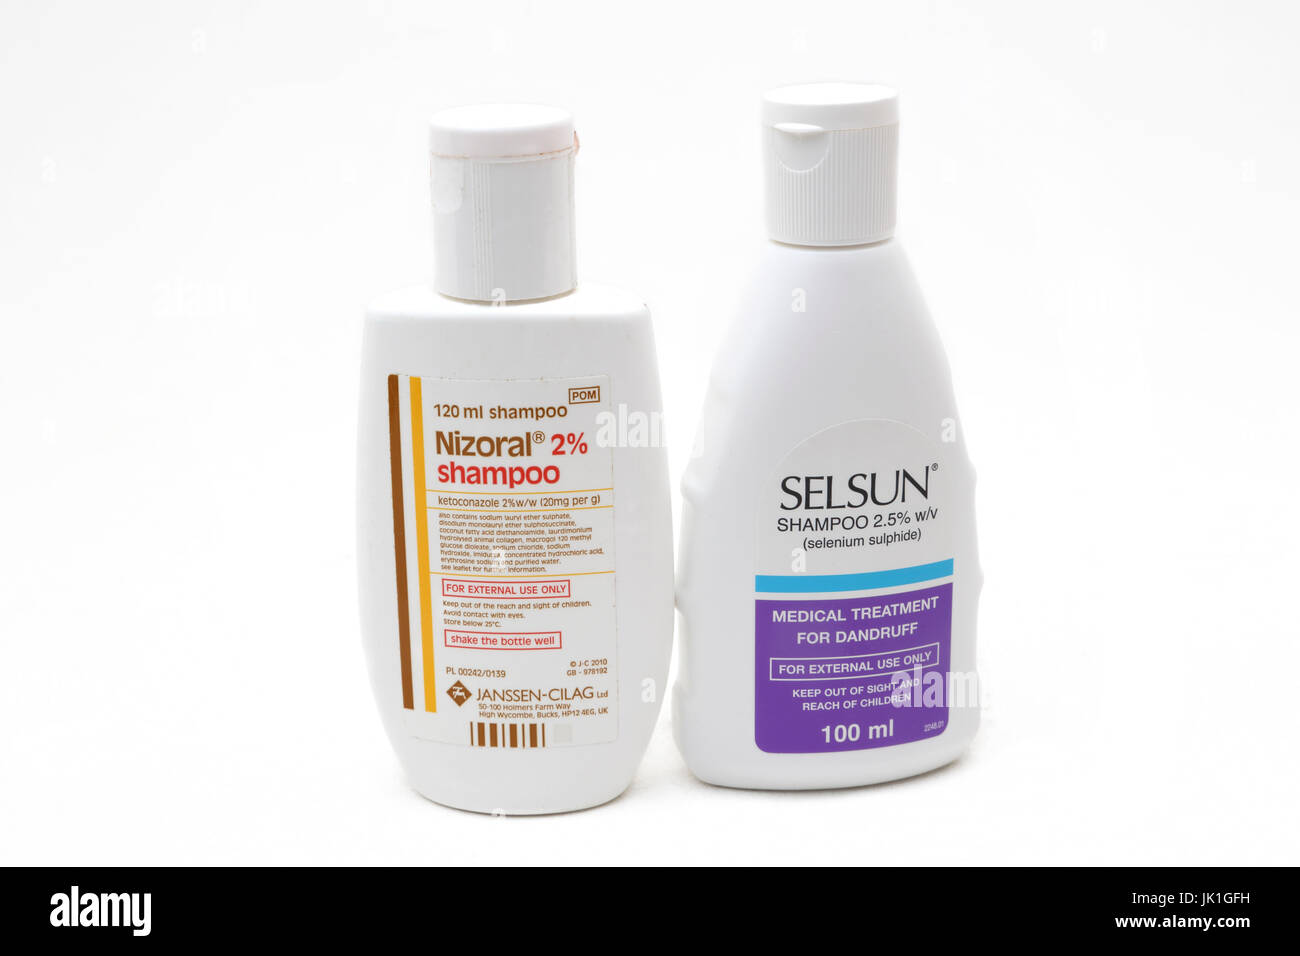 Nizoral shampooing Selsun et médicamentés Photo Stock - Alamy